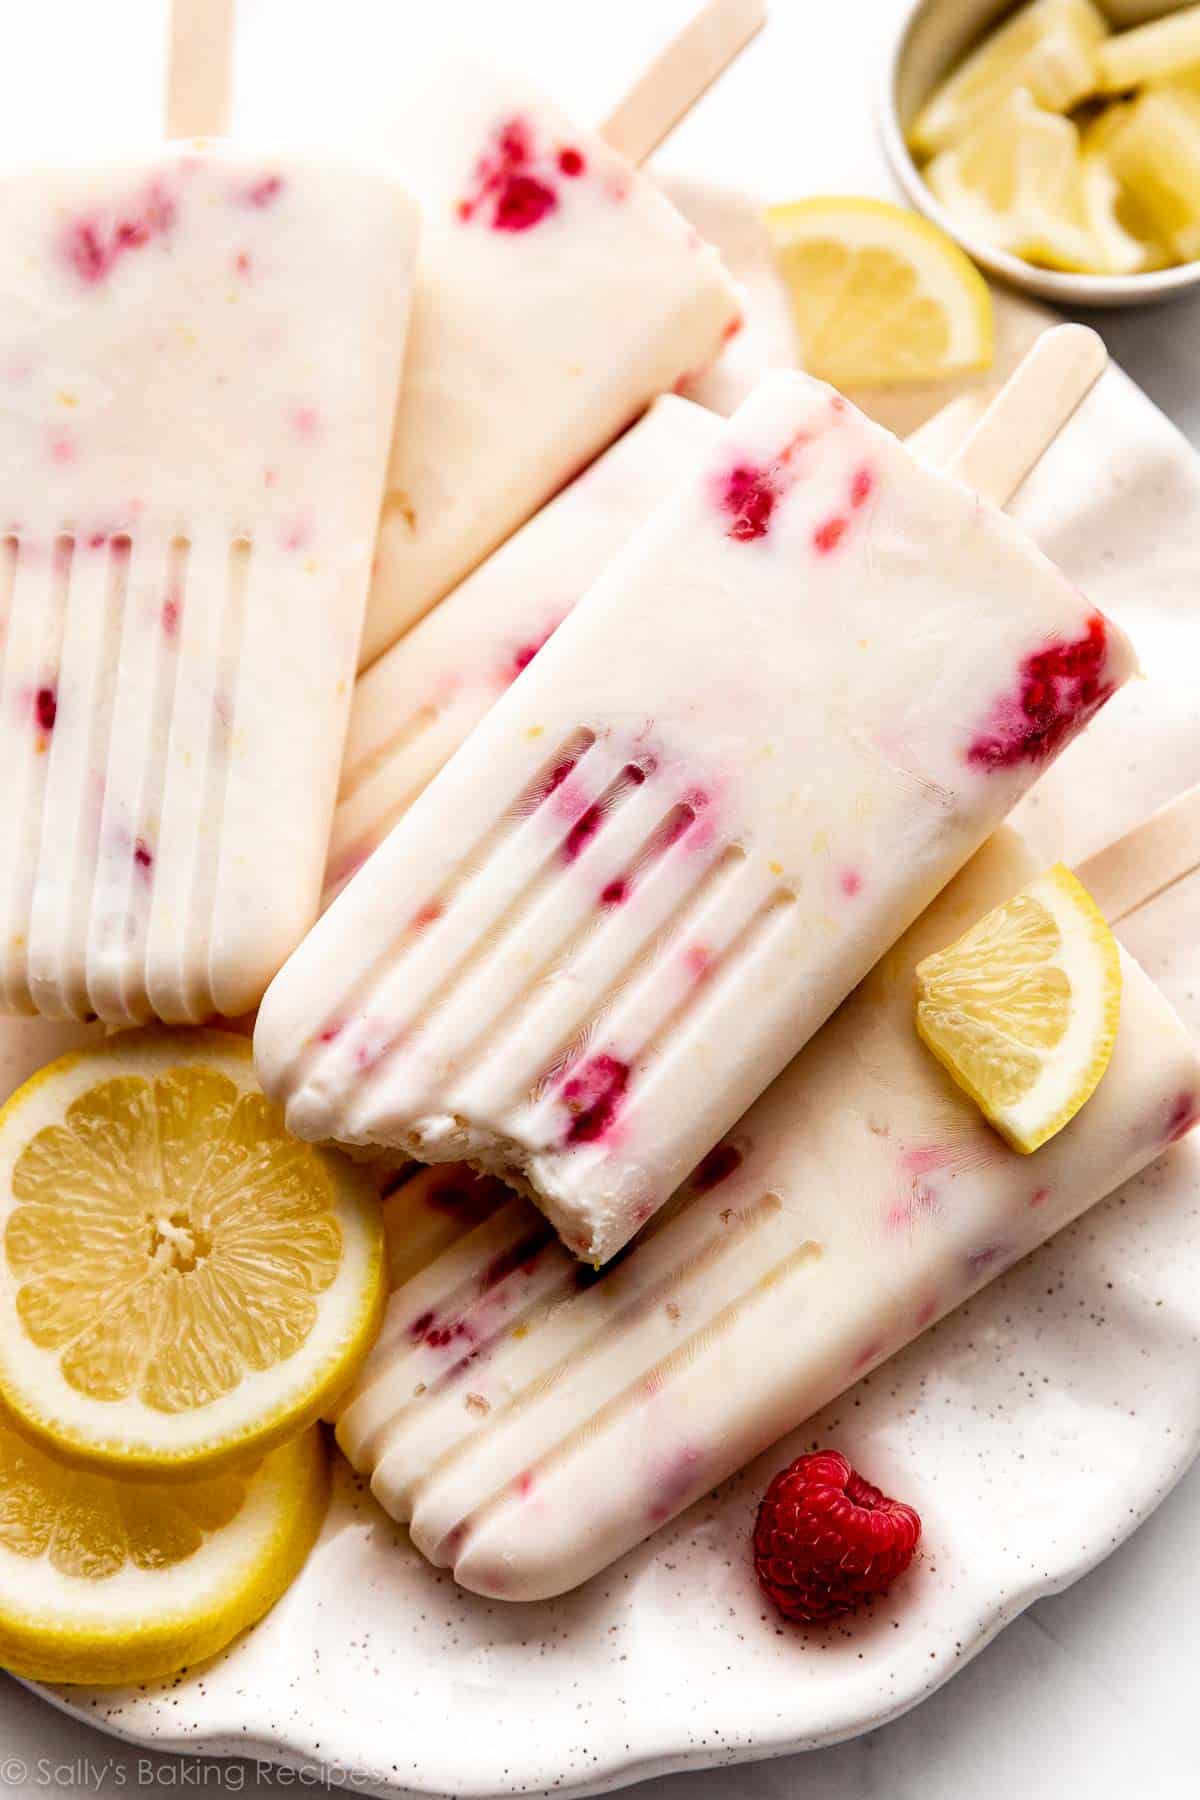 creamy lemon popsicles with raspberries inside on plate with fresh lemon slices.